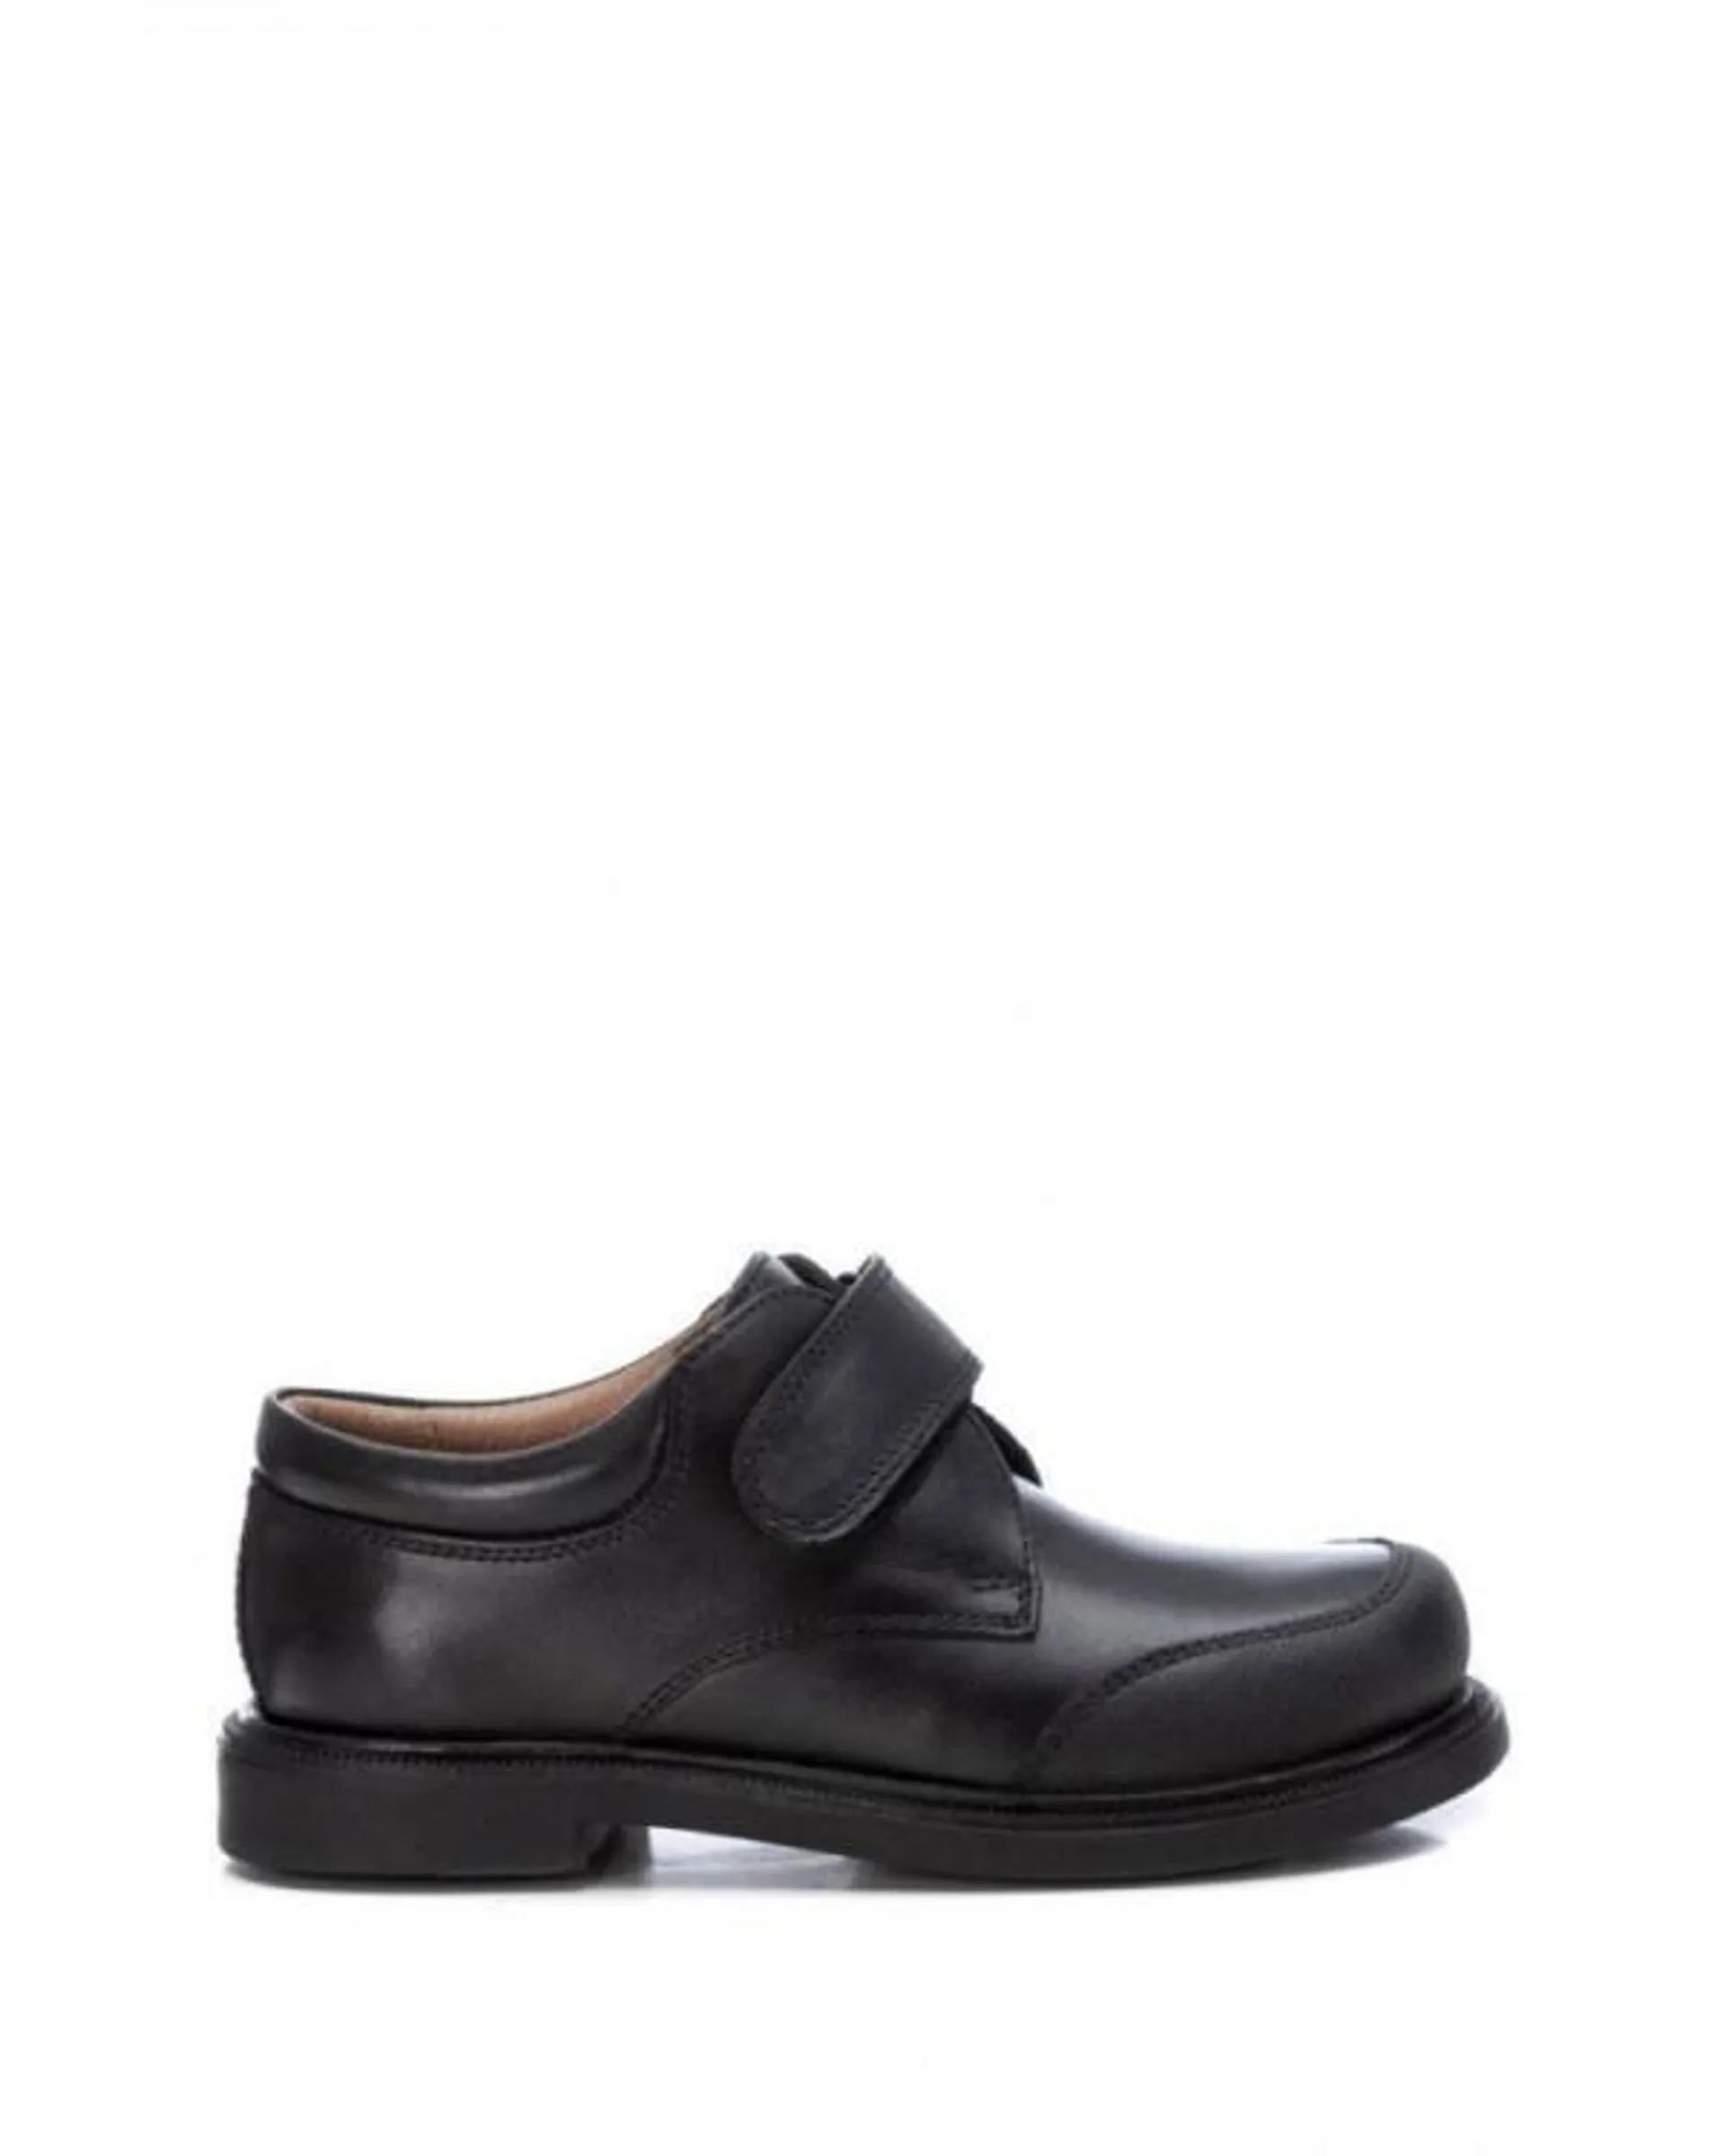 150256 Zapatos Colegiales Infantil Negro